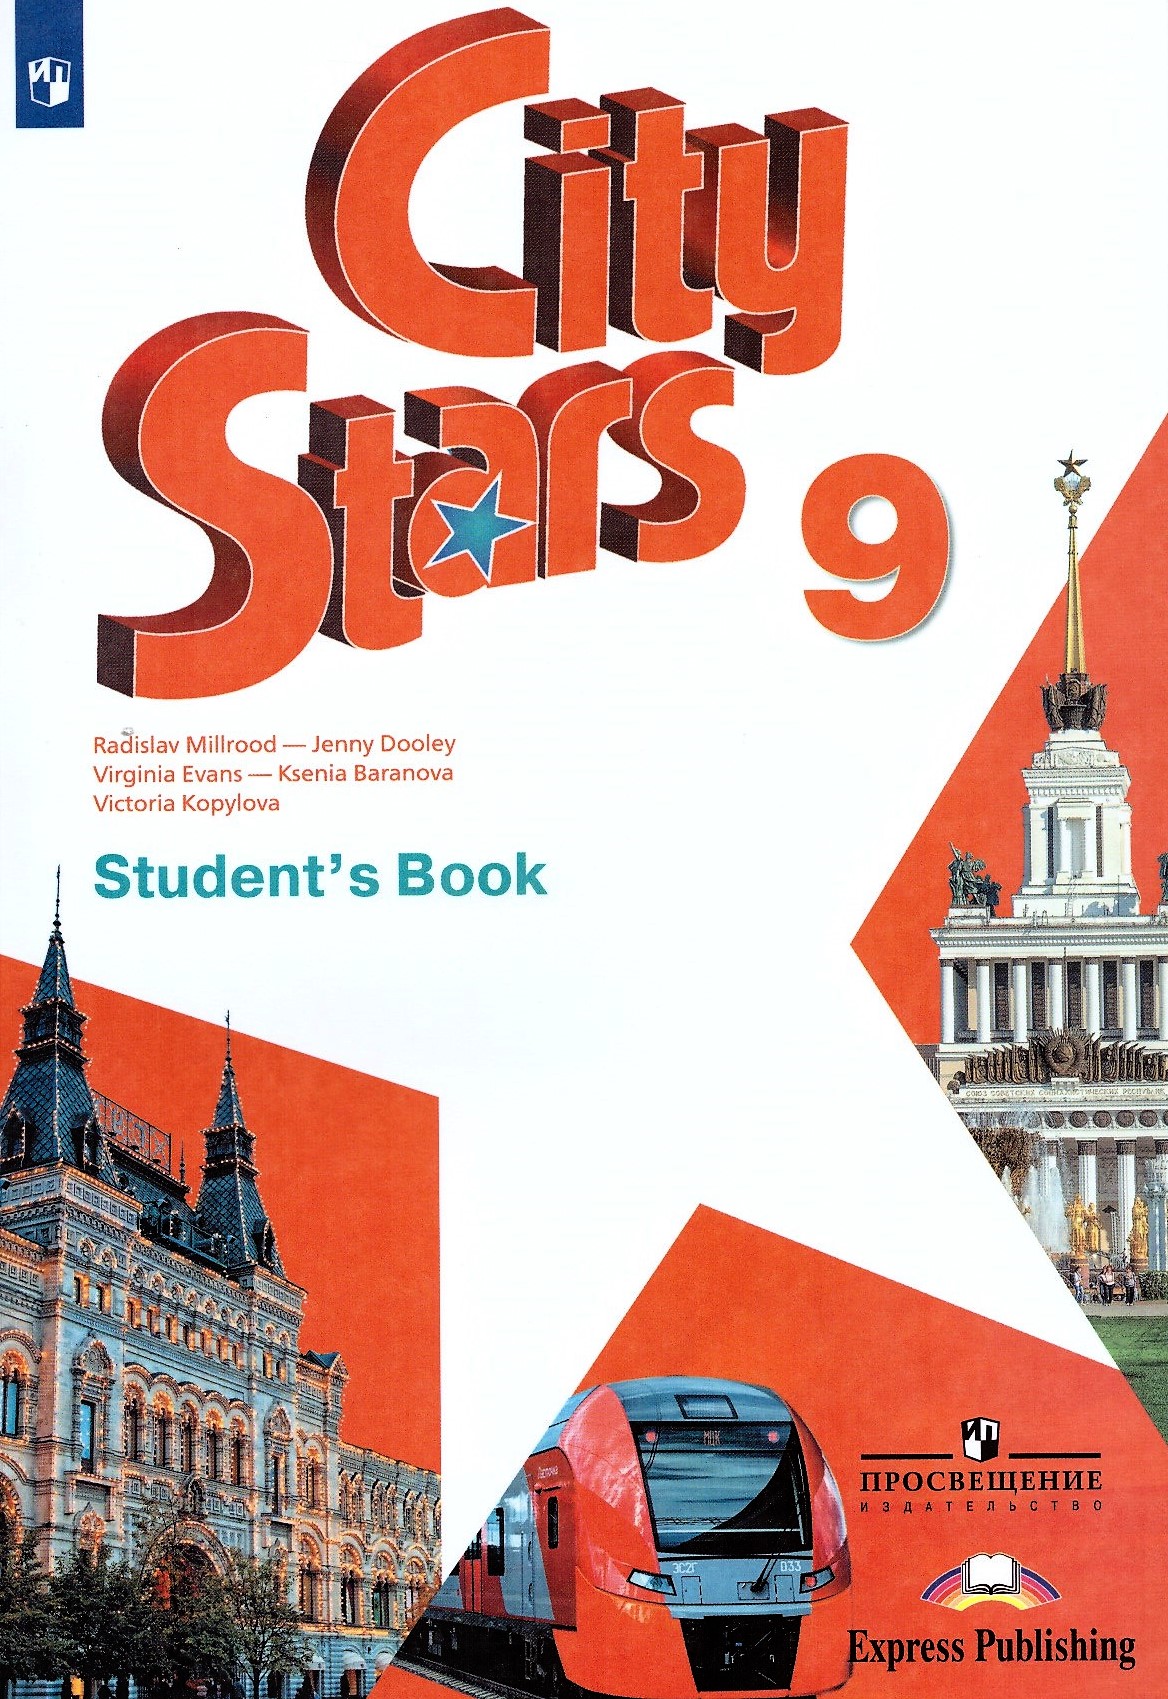 C 9 учебник. Английский язык. Учебник. City Stars учебник английского языка. City Stars 9 класс учебник. City Star учебник по английскому.